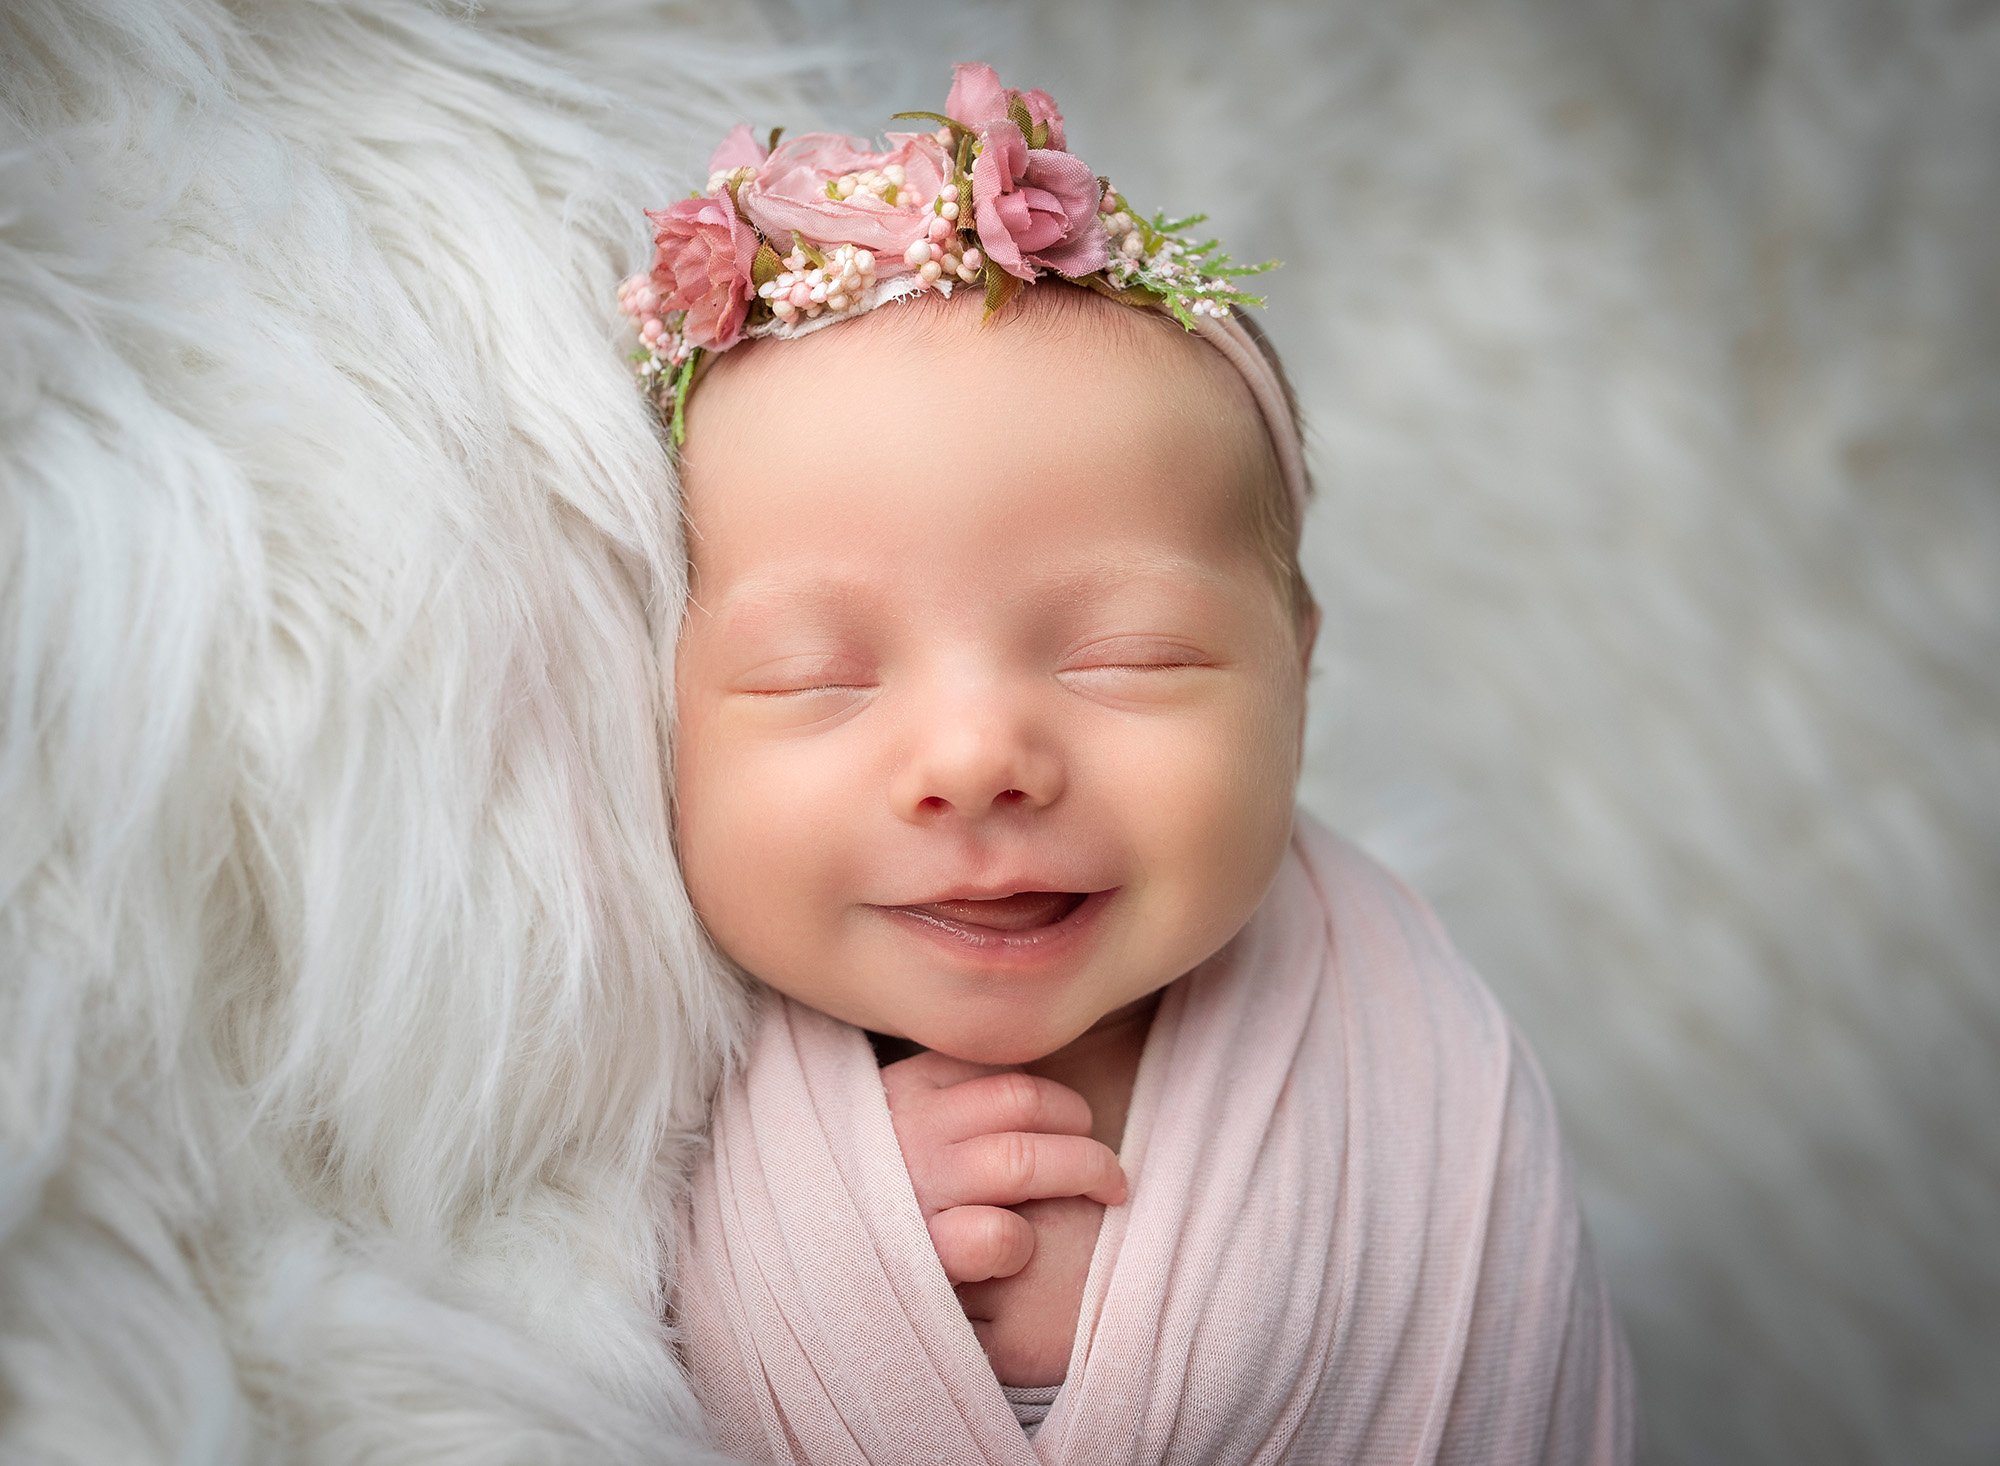 baby smiling